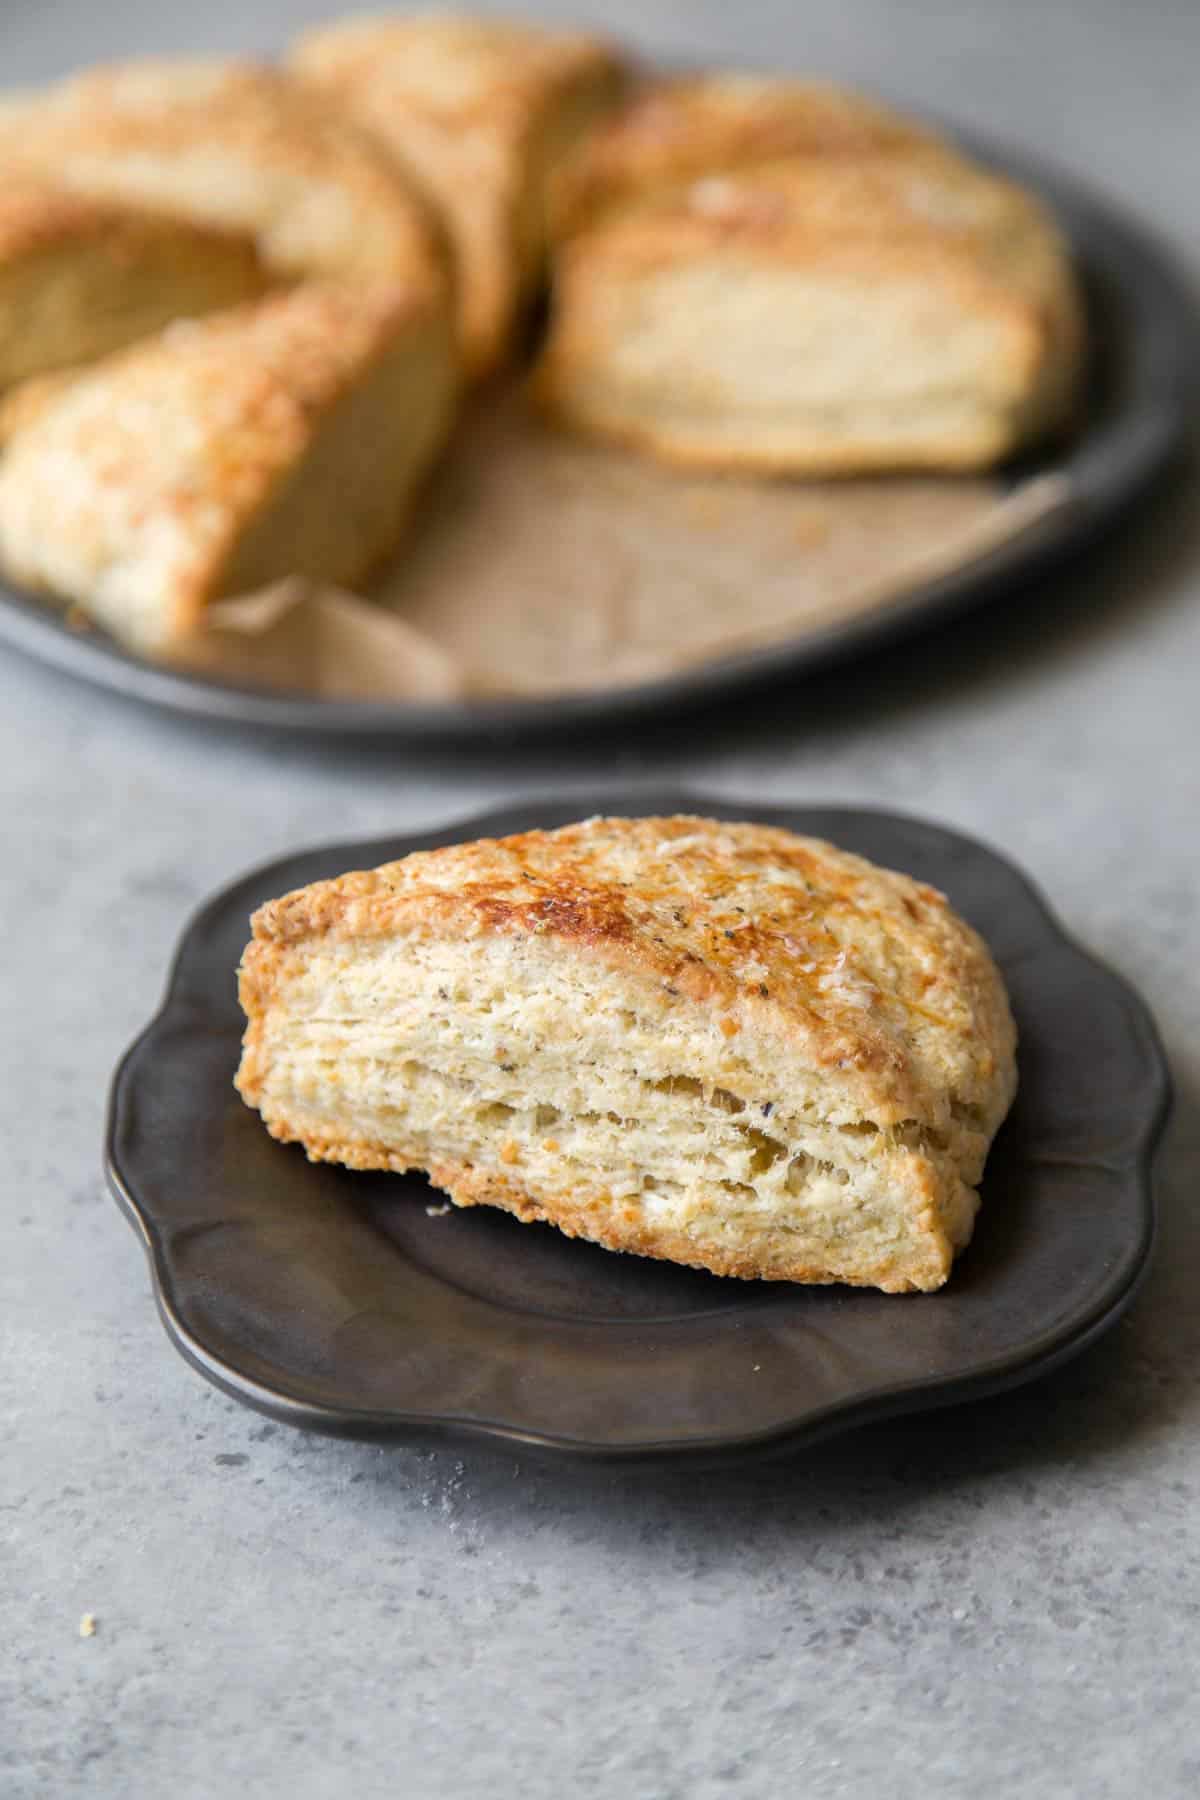 savory cheese scone wedge on dark plate.